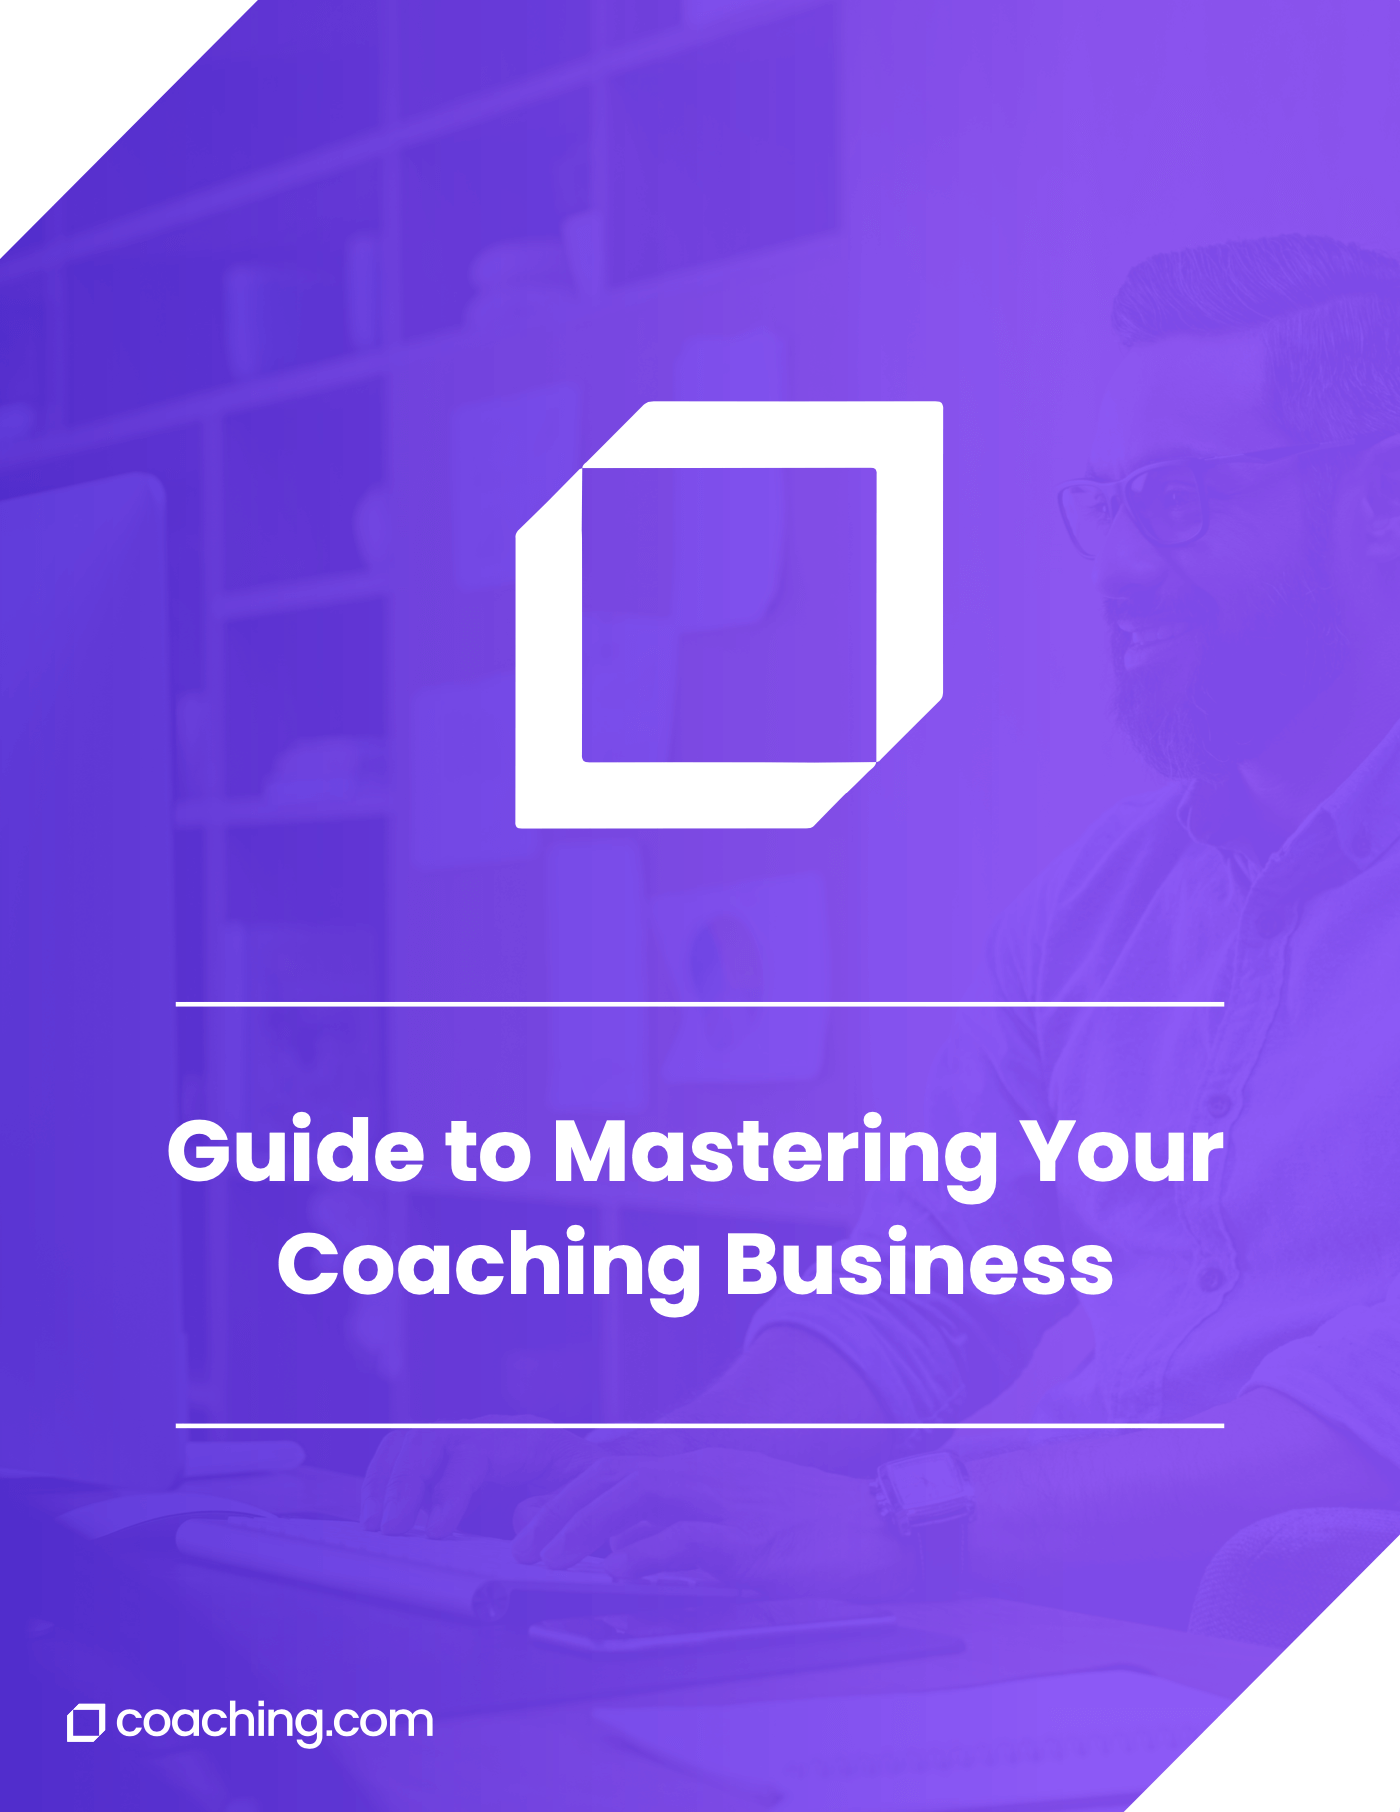 Coaching.com - pages list your practice form